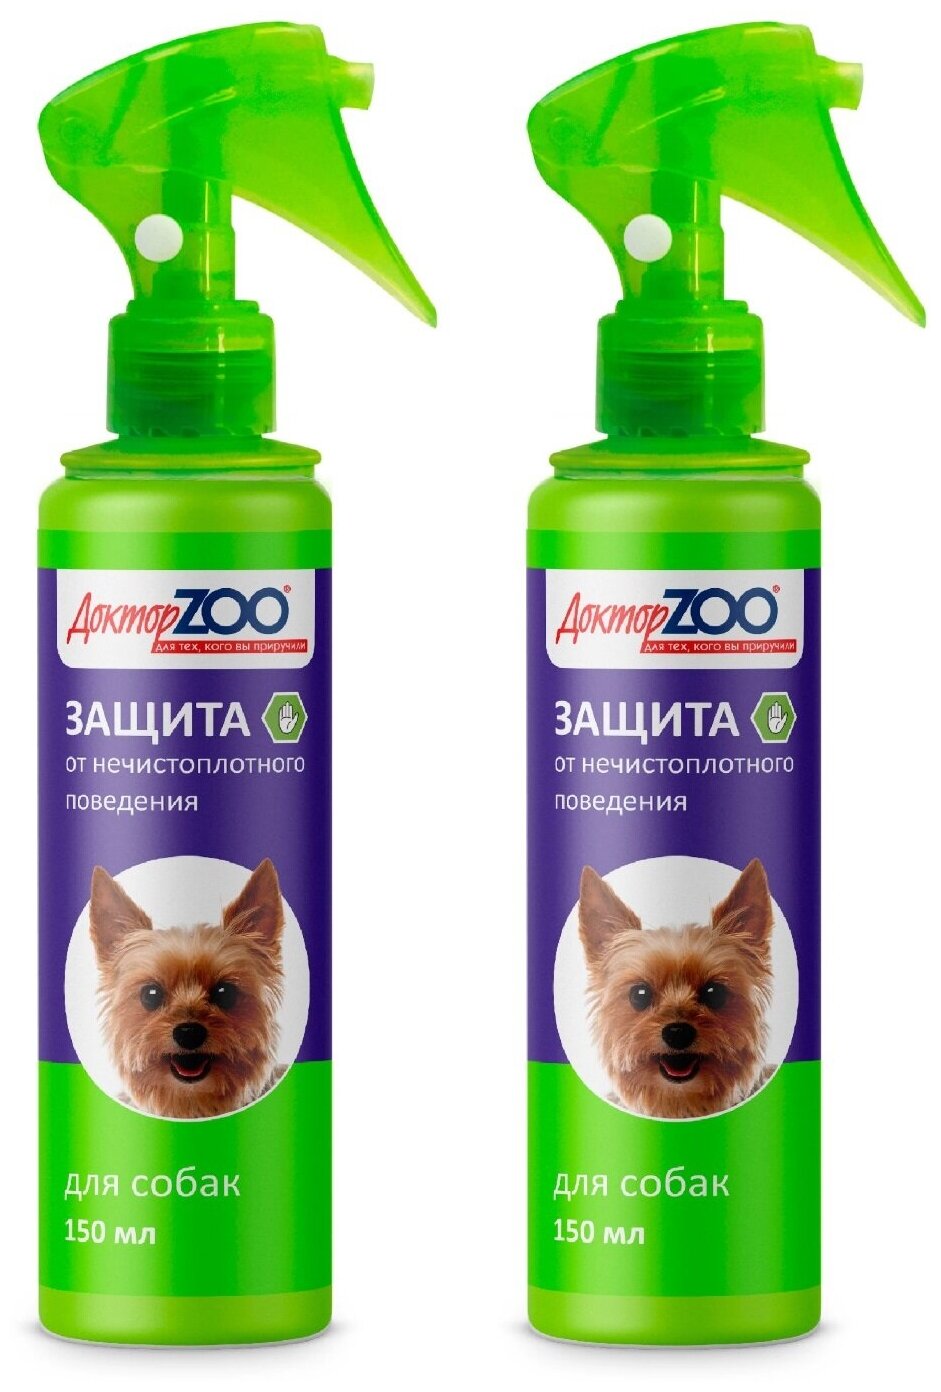 ДокторZoo спрей для собак защита от нечистоплотного поведения, антигадин, 150 мл х 2 шт.